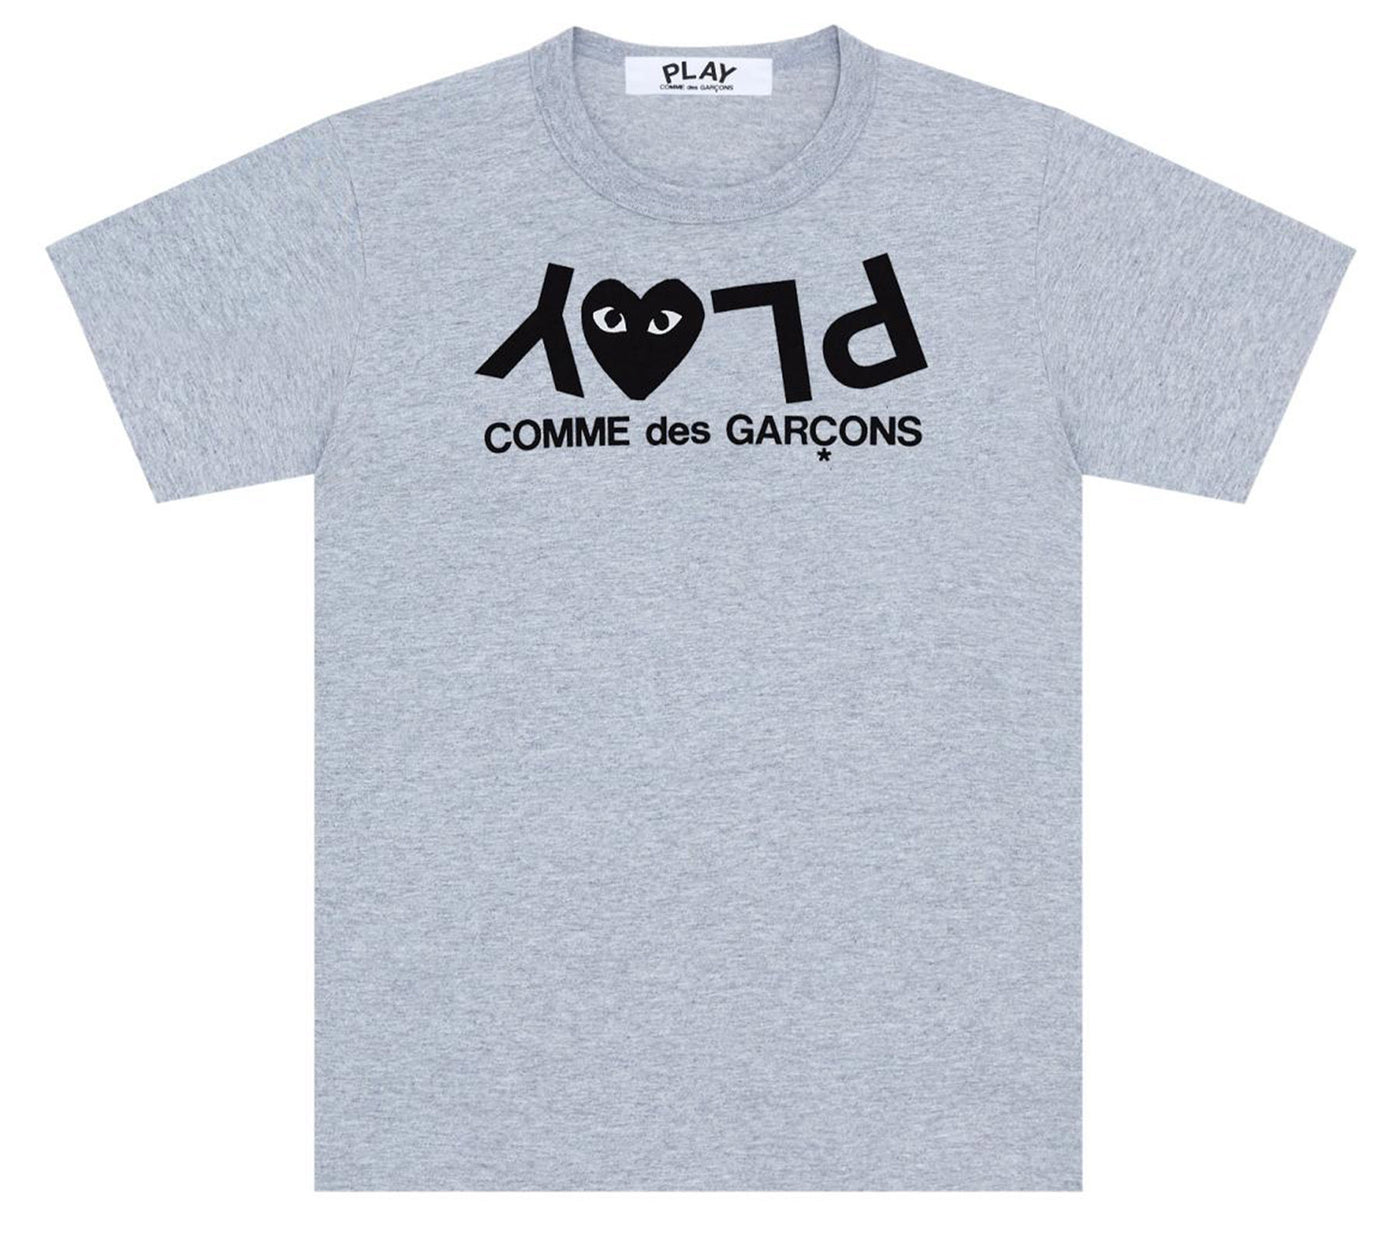     Comme-des-Garcons-Play-T-Shirt-with-Black-Invert-Logo-Print-Men-Grey-1